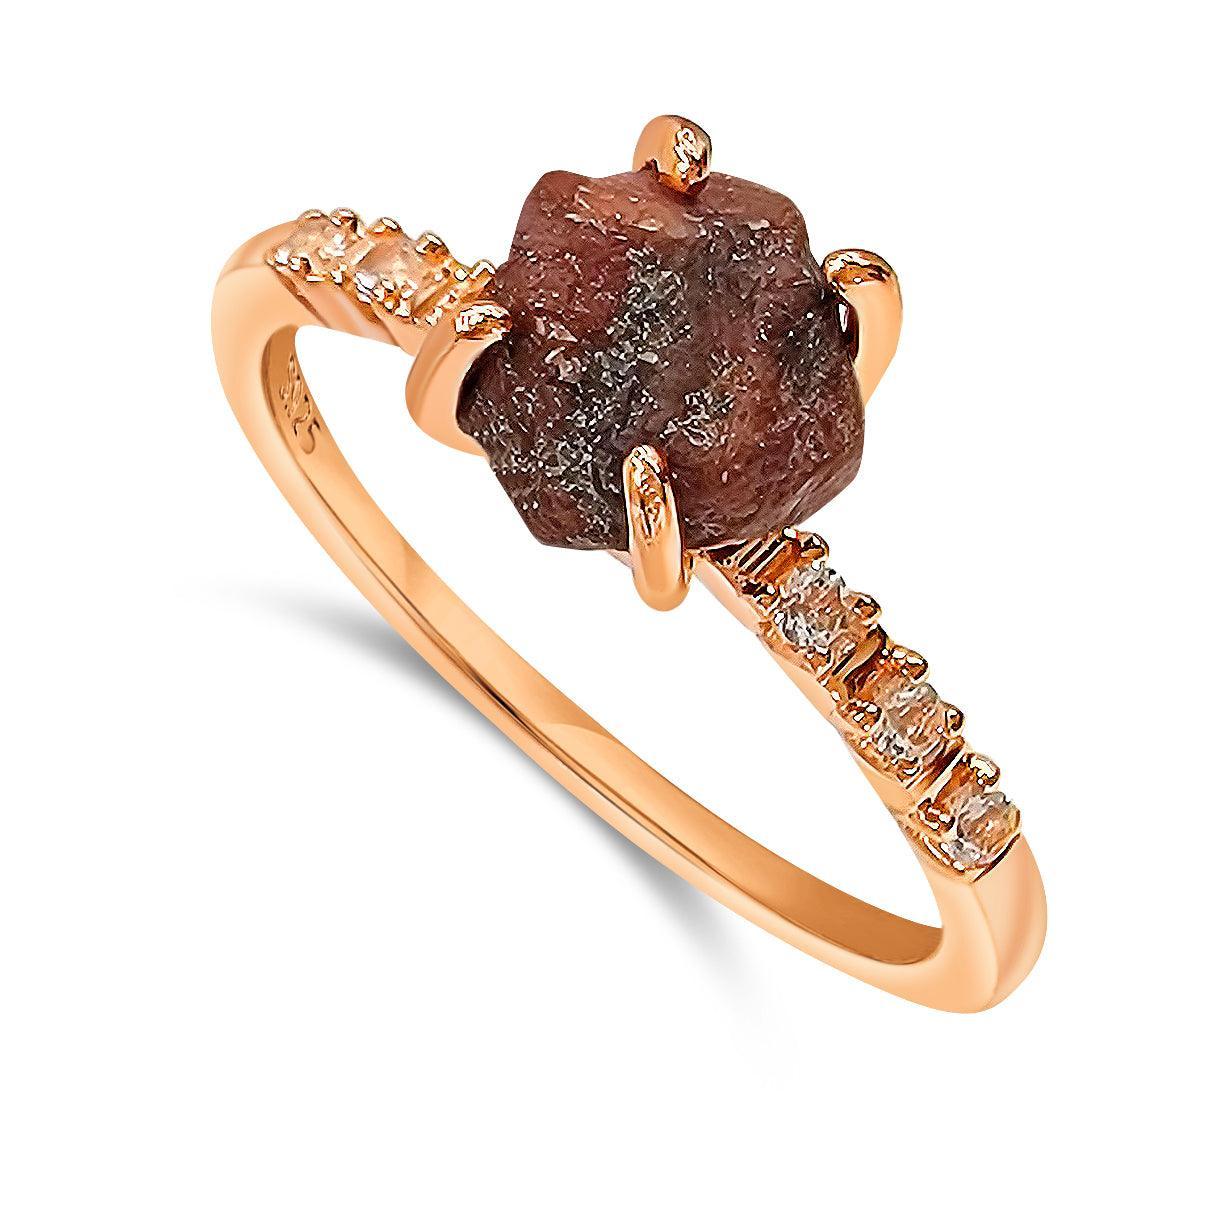 Raw Ruby Dainty Ring - Uniquelan Jewelry